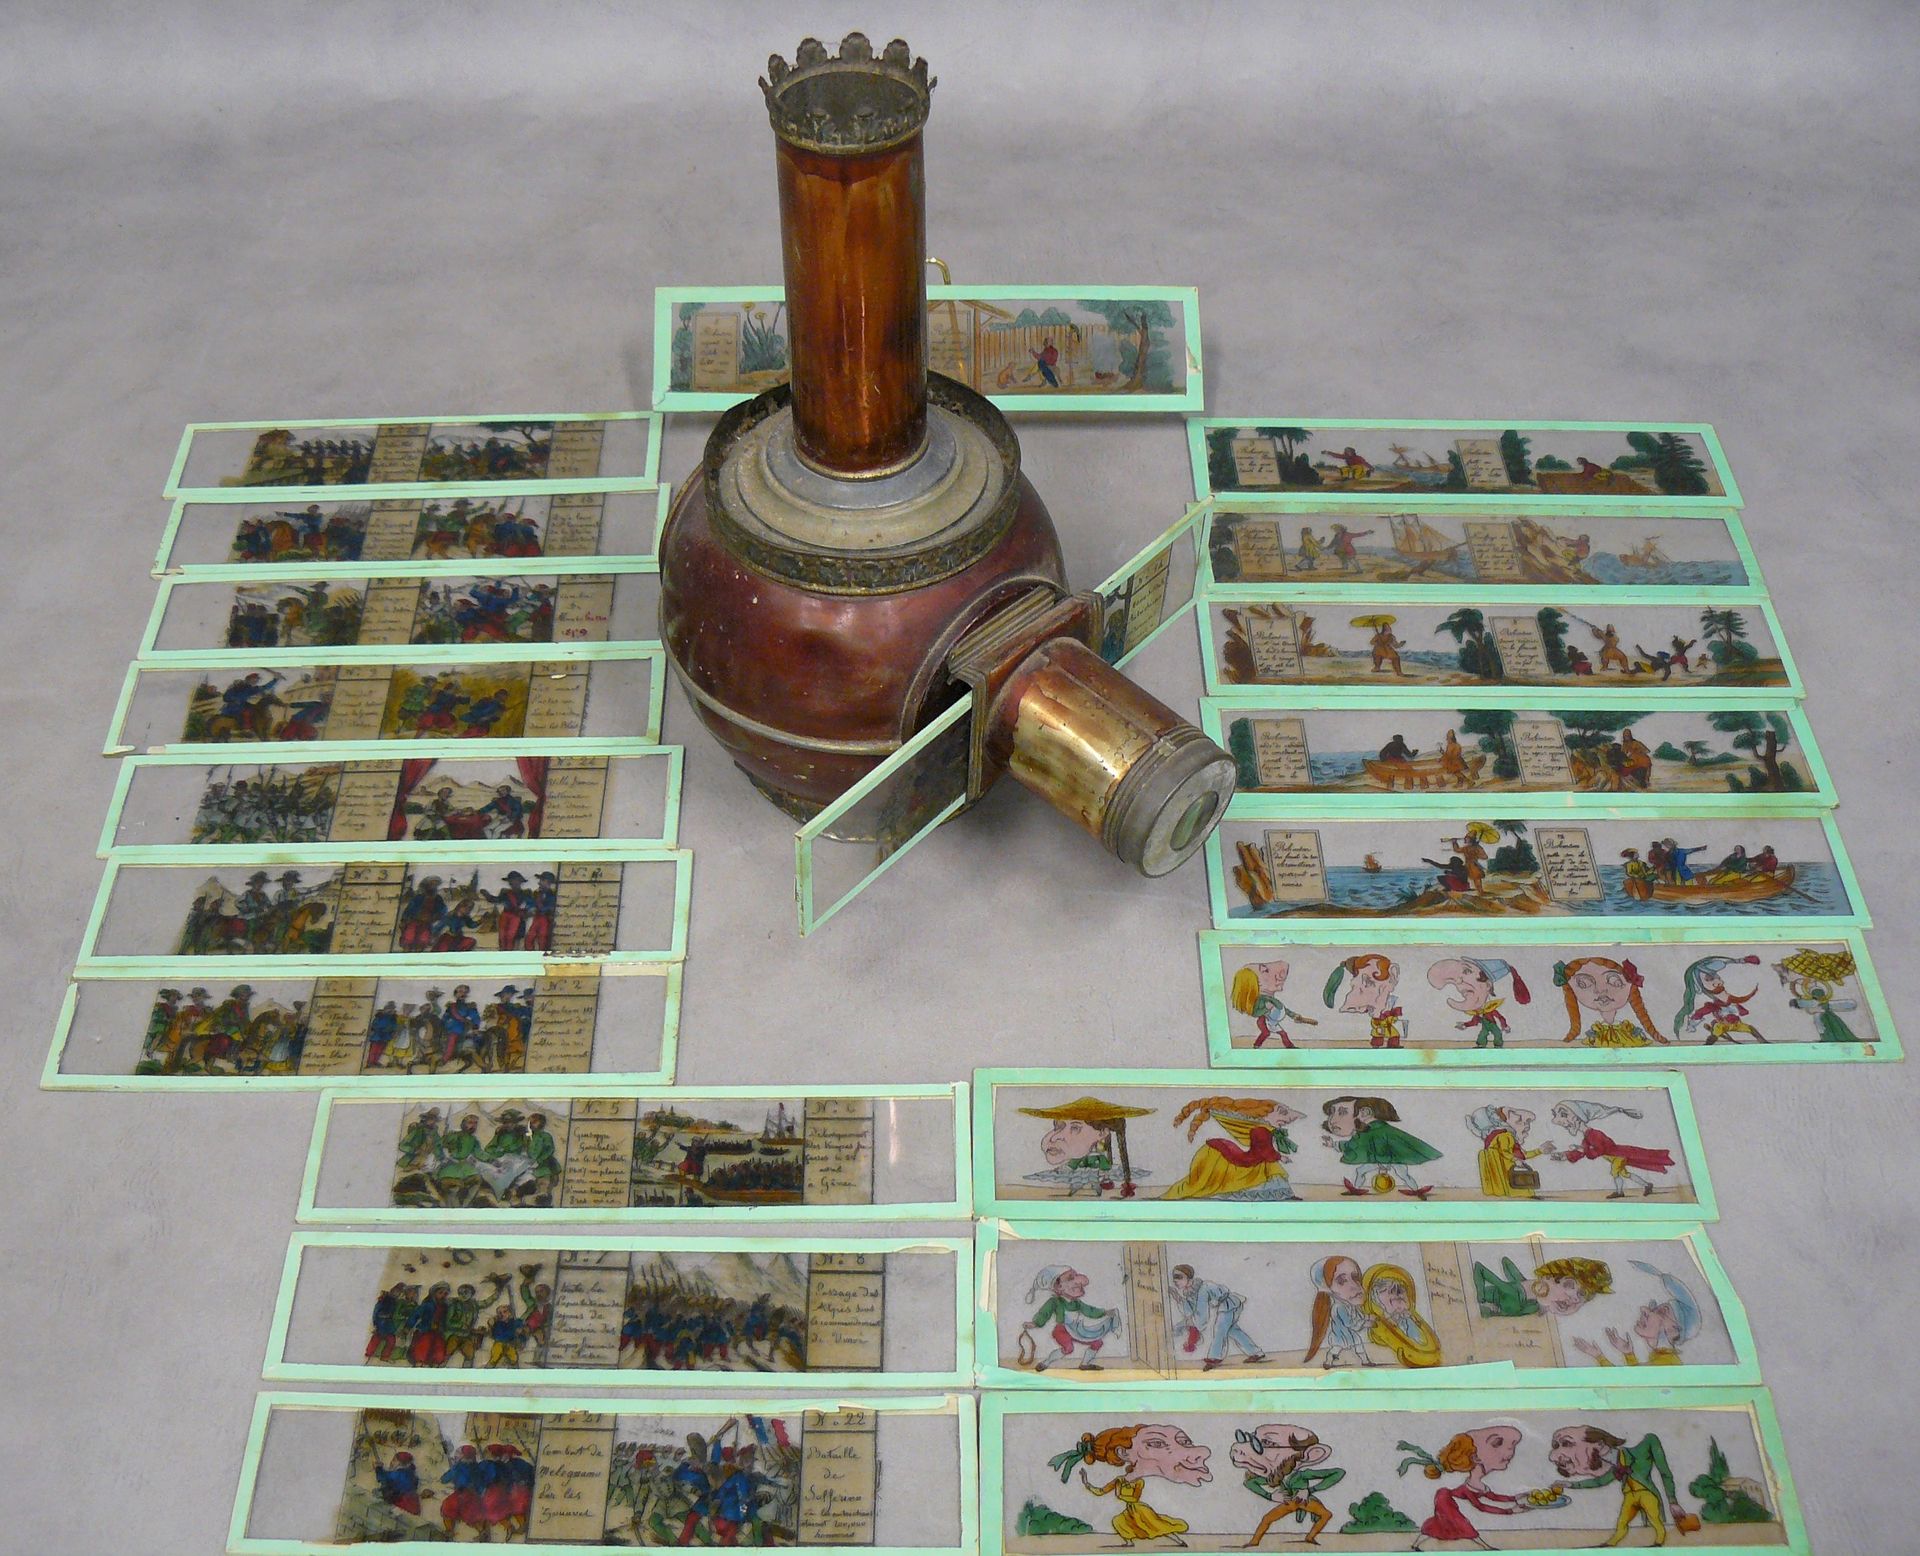 Null 一个铜制的魔术灯笼--27 x 23厘米，有两个彩绘玻璃视图的盒子，其中包括：11个关于第二帝国的板块，6个关于罗宾逊的板块和4个各种漫画板块。